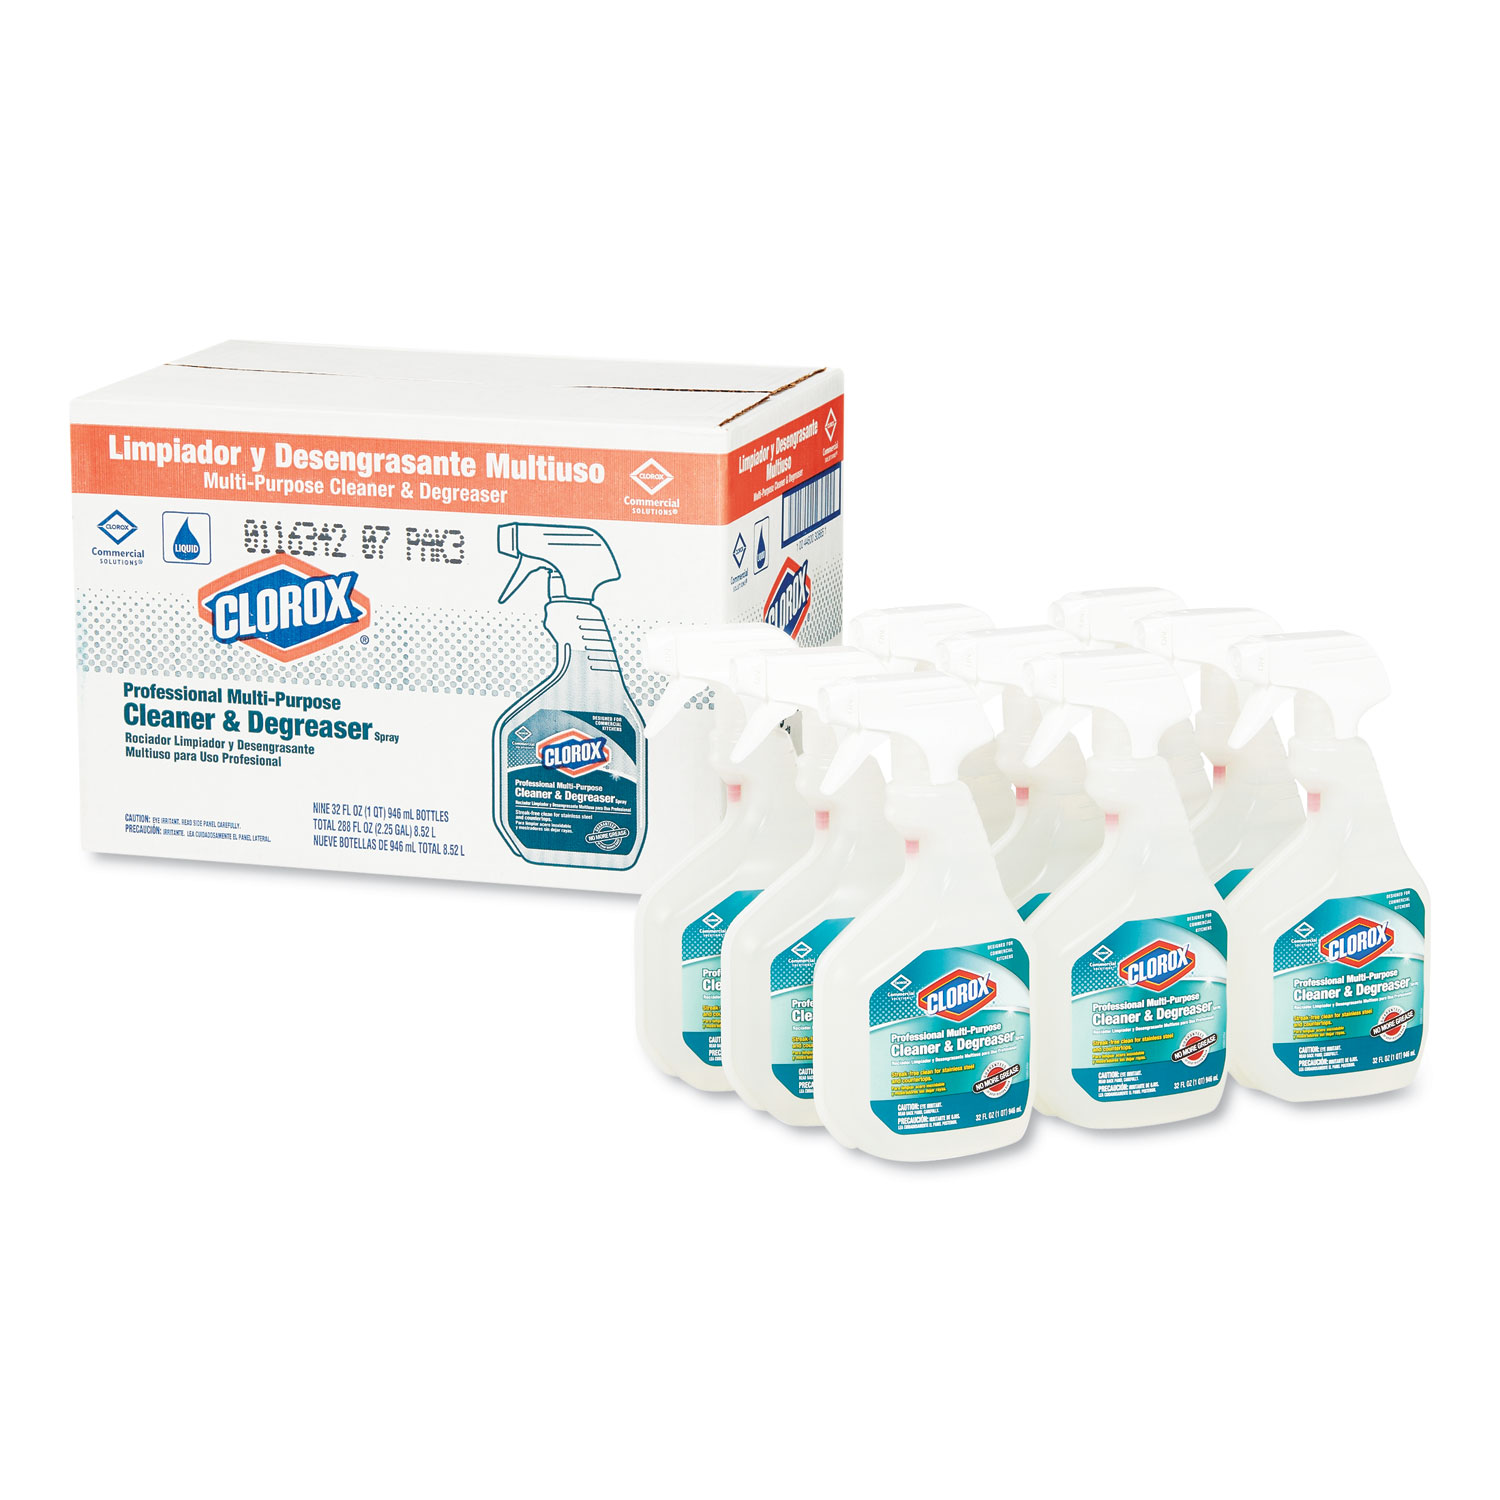  Clorox 30865 Professional Multi-Purpose Cleaner and Degreaser Spray, 32 oz Bottle, 9/Carton (CLO30865CT) 